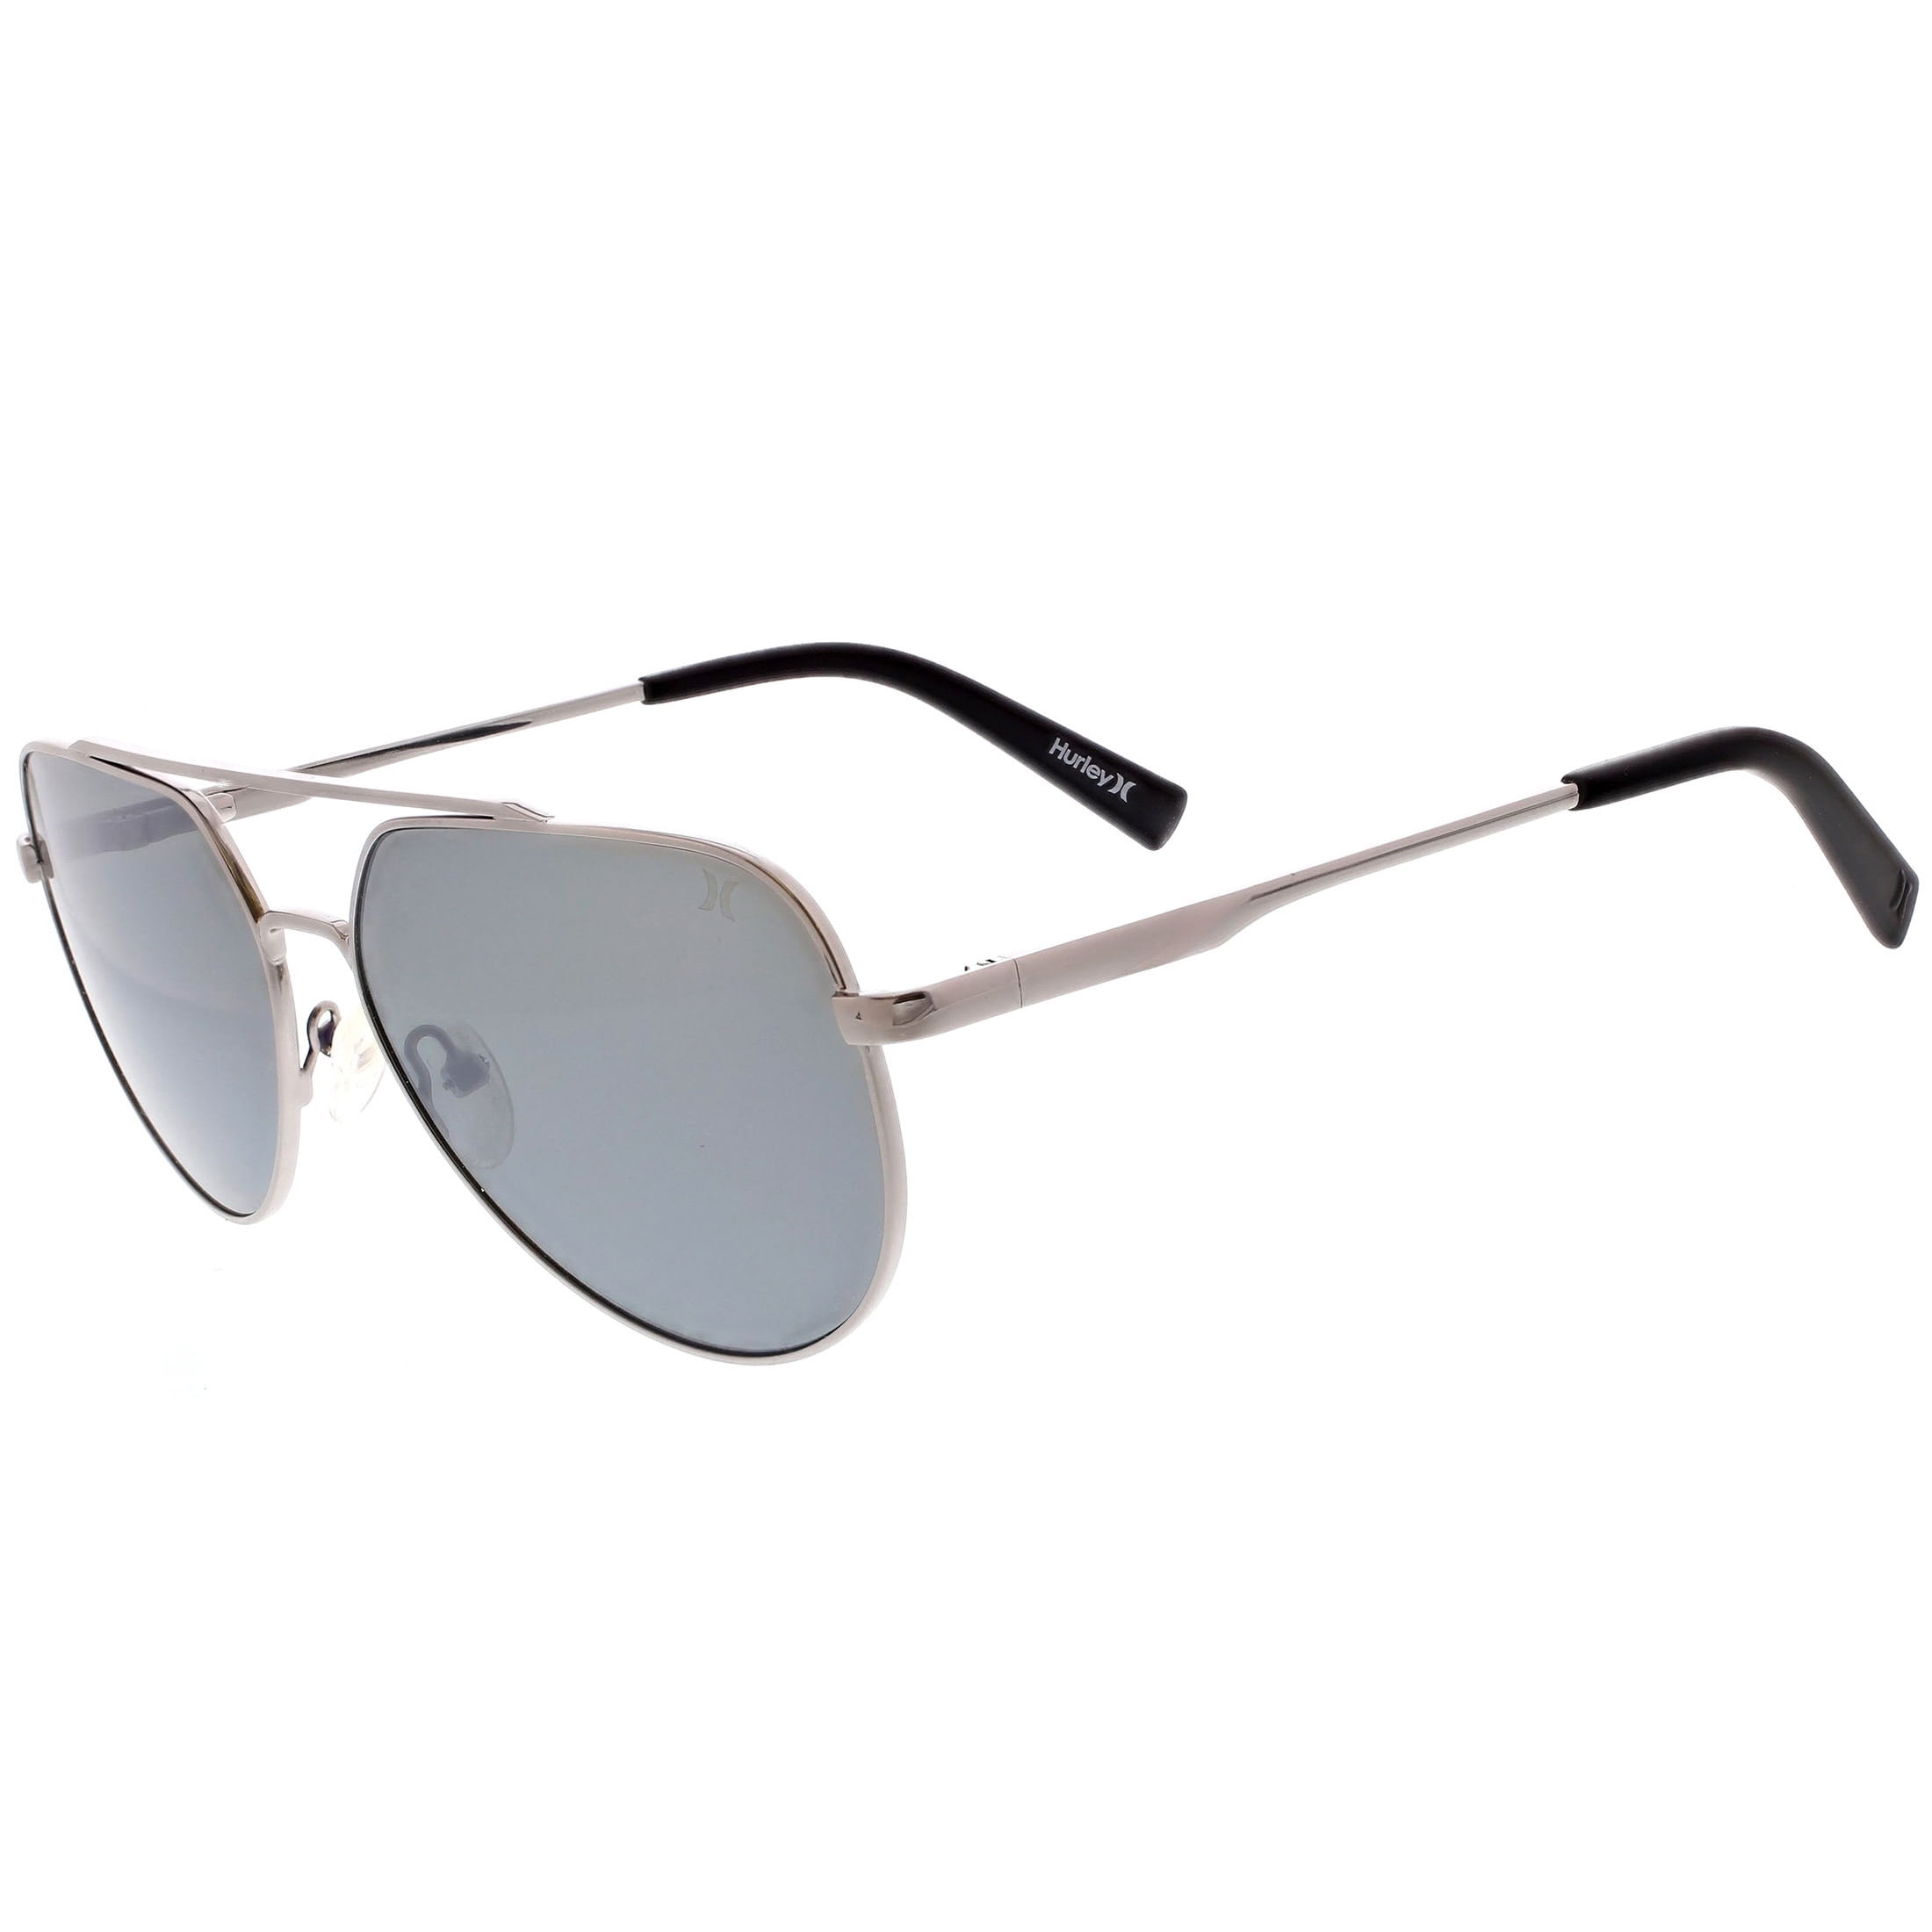 Hurley Men's Rx'able Sport Polarized Sunglasses, Hsm4003p Beachbreak, Gunmetal, 57-14-135, with Case, Gray